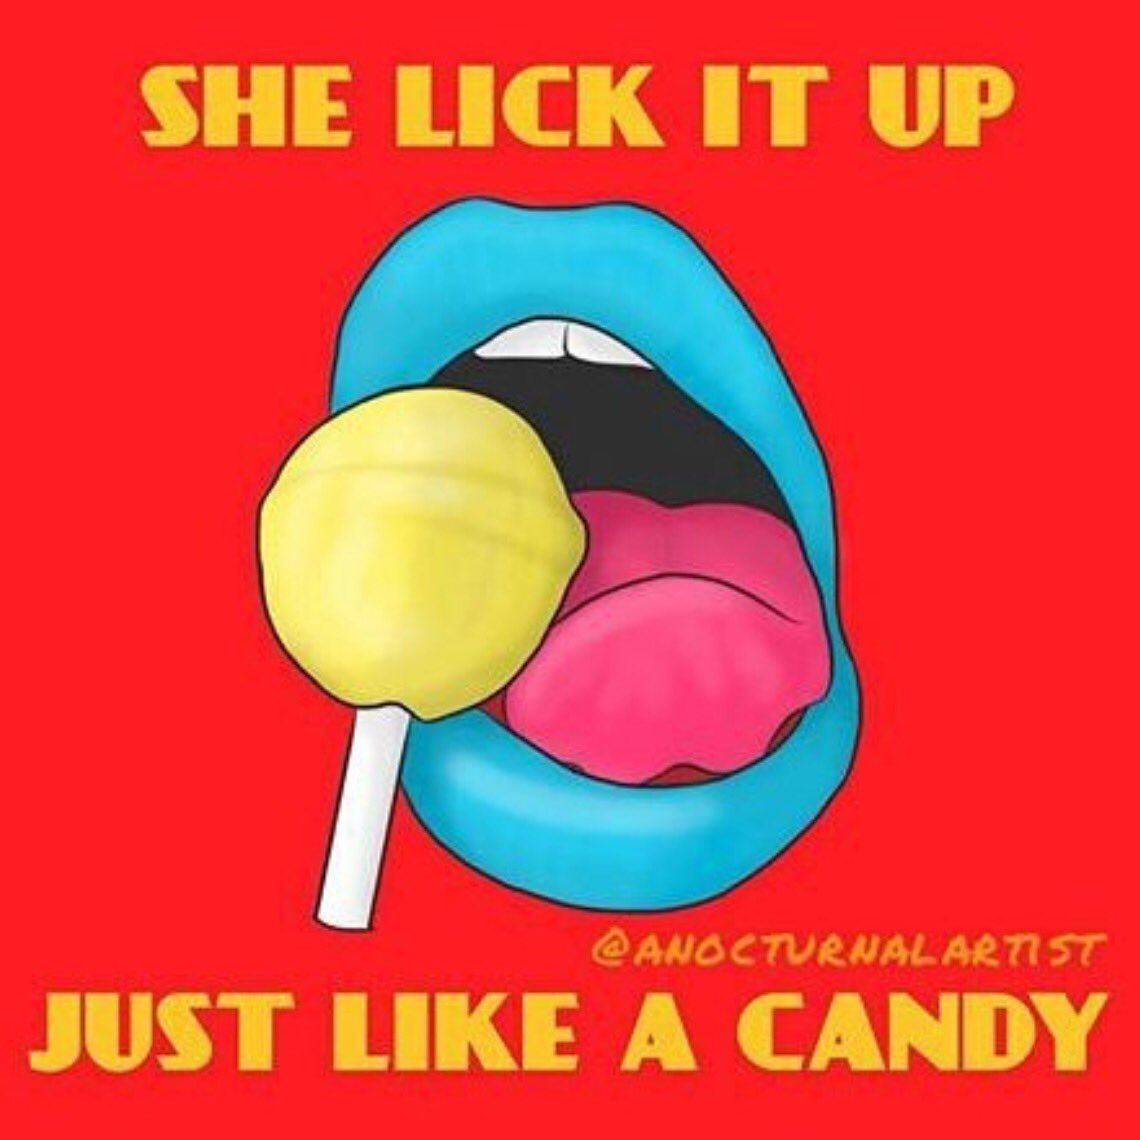 She Licks Pussy - she lick it - Hot Handjob and She Licks the Cum Up - Free ...